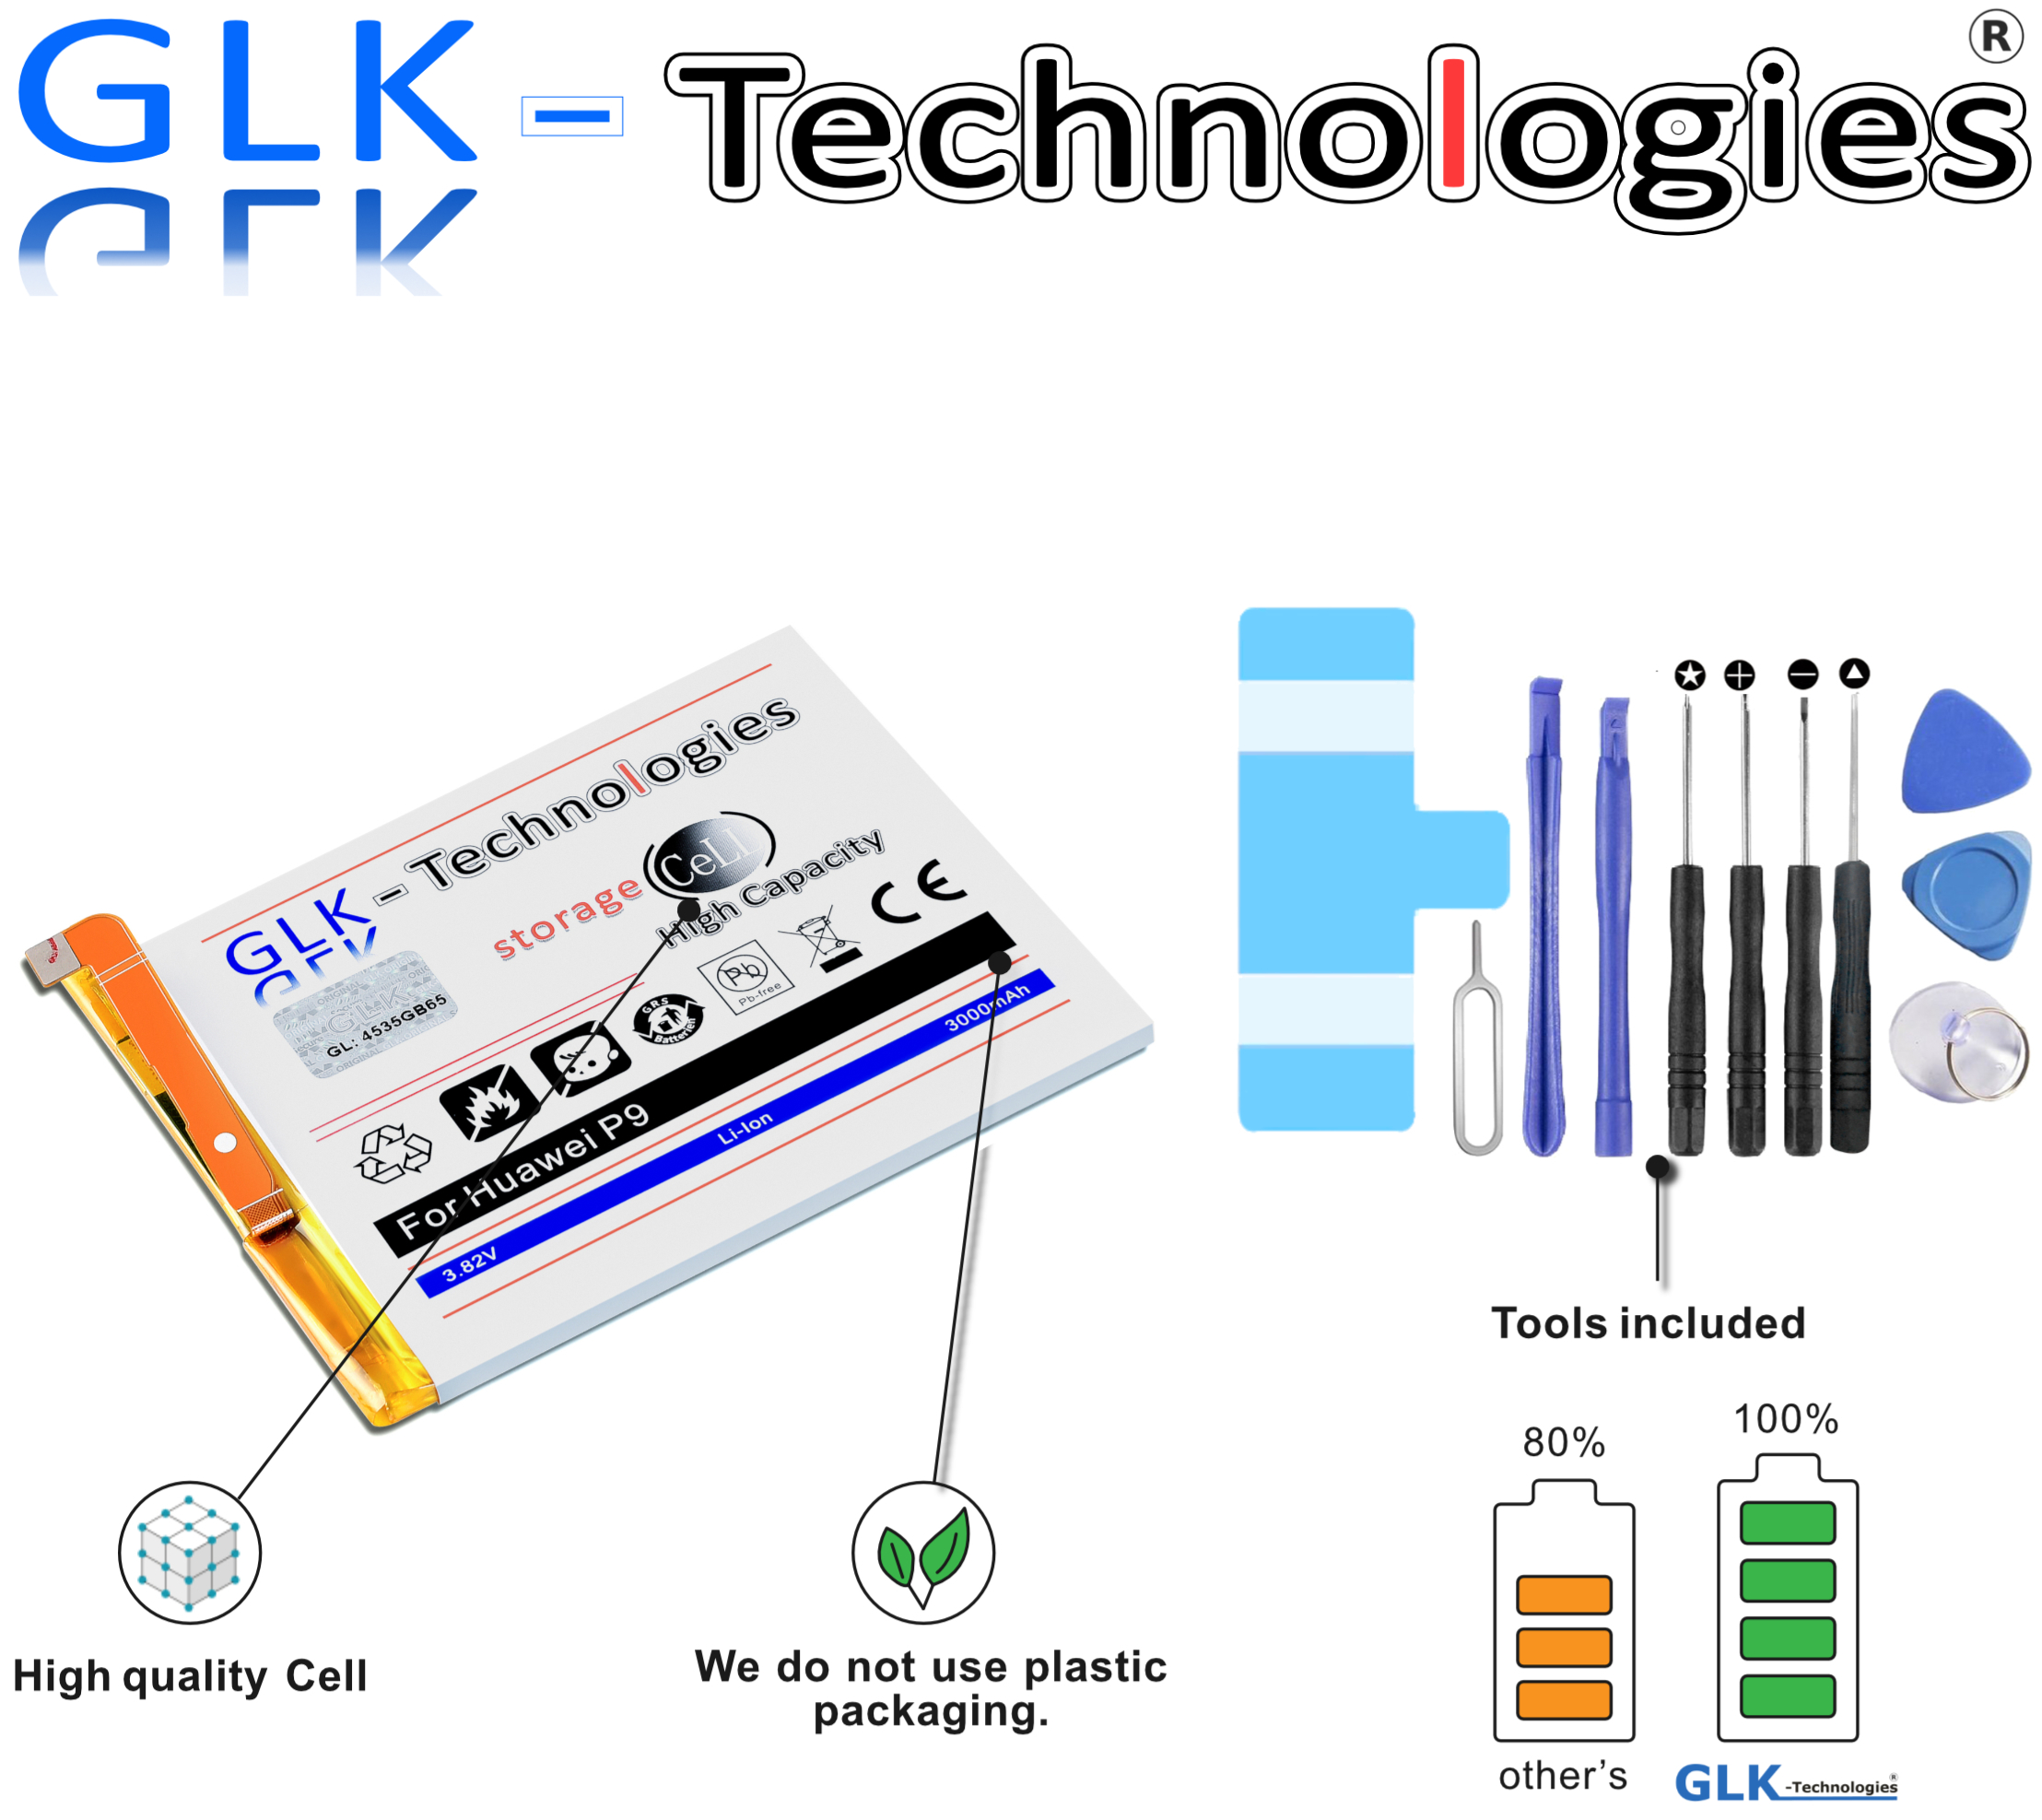 GLK-TECHNOLOGIES High Power Ersatz Akku Huawei Akku Smartphone Kit HB366481ECW Ersatz inkl. Werkzeug P9 Li-Ion Battery für Set